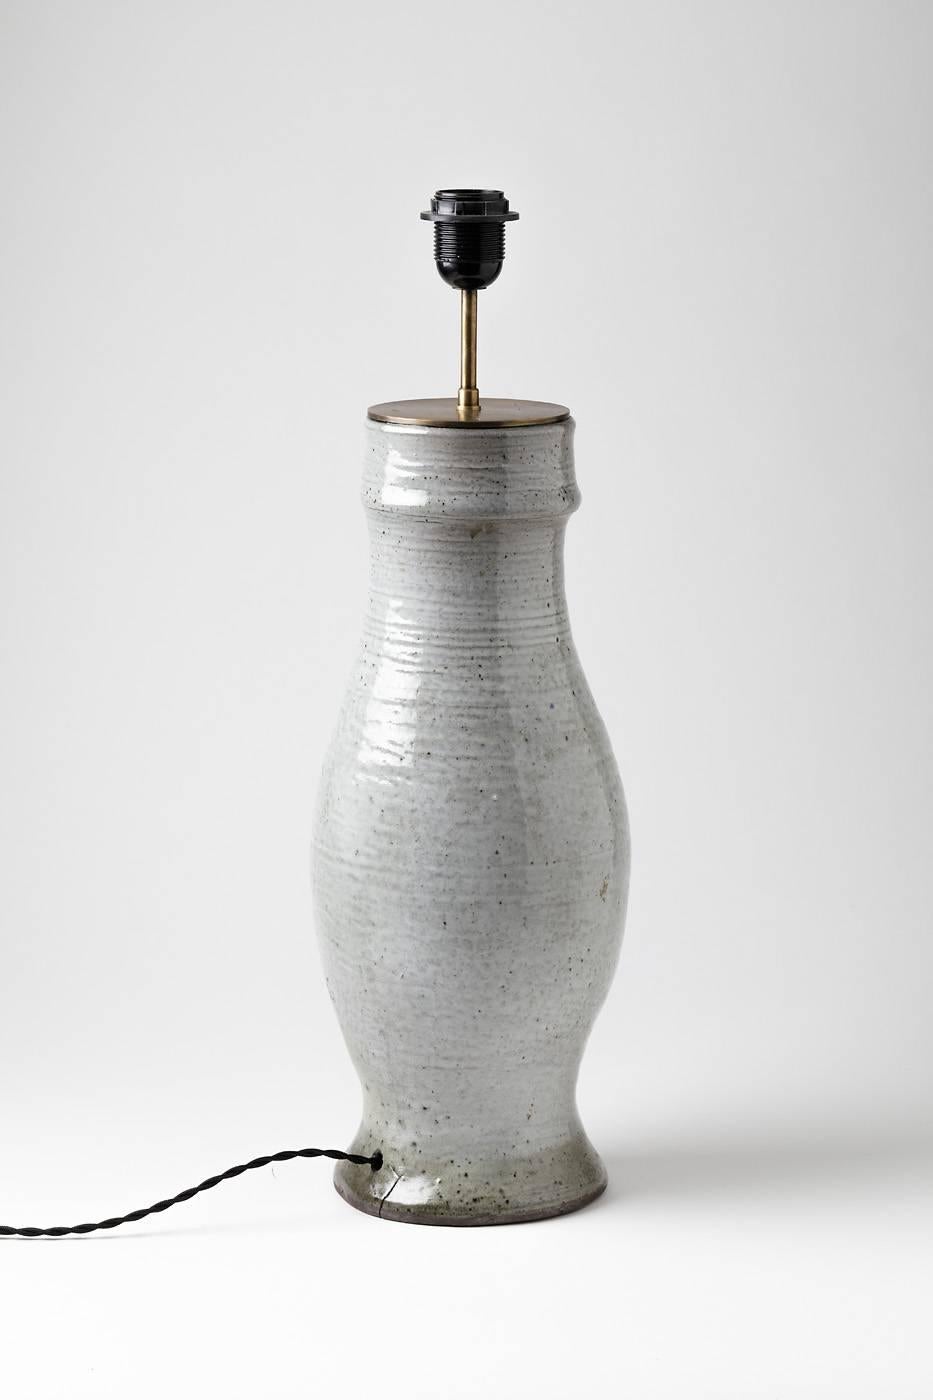 Elegant ceramic lamp by Norbert Pierlot, circa 1970.

Beautiful white ceramic glaze .

Signed under the base 